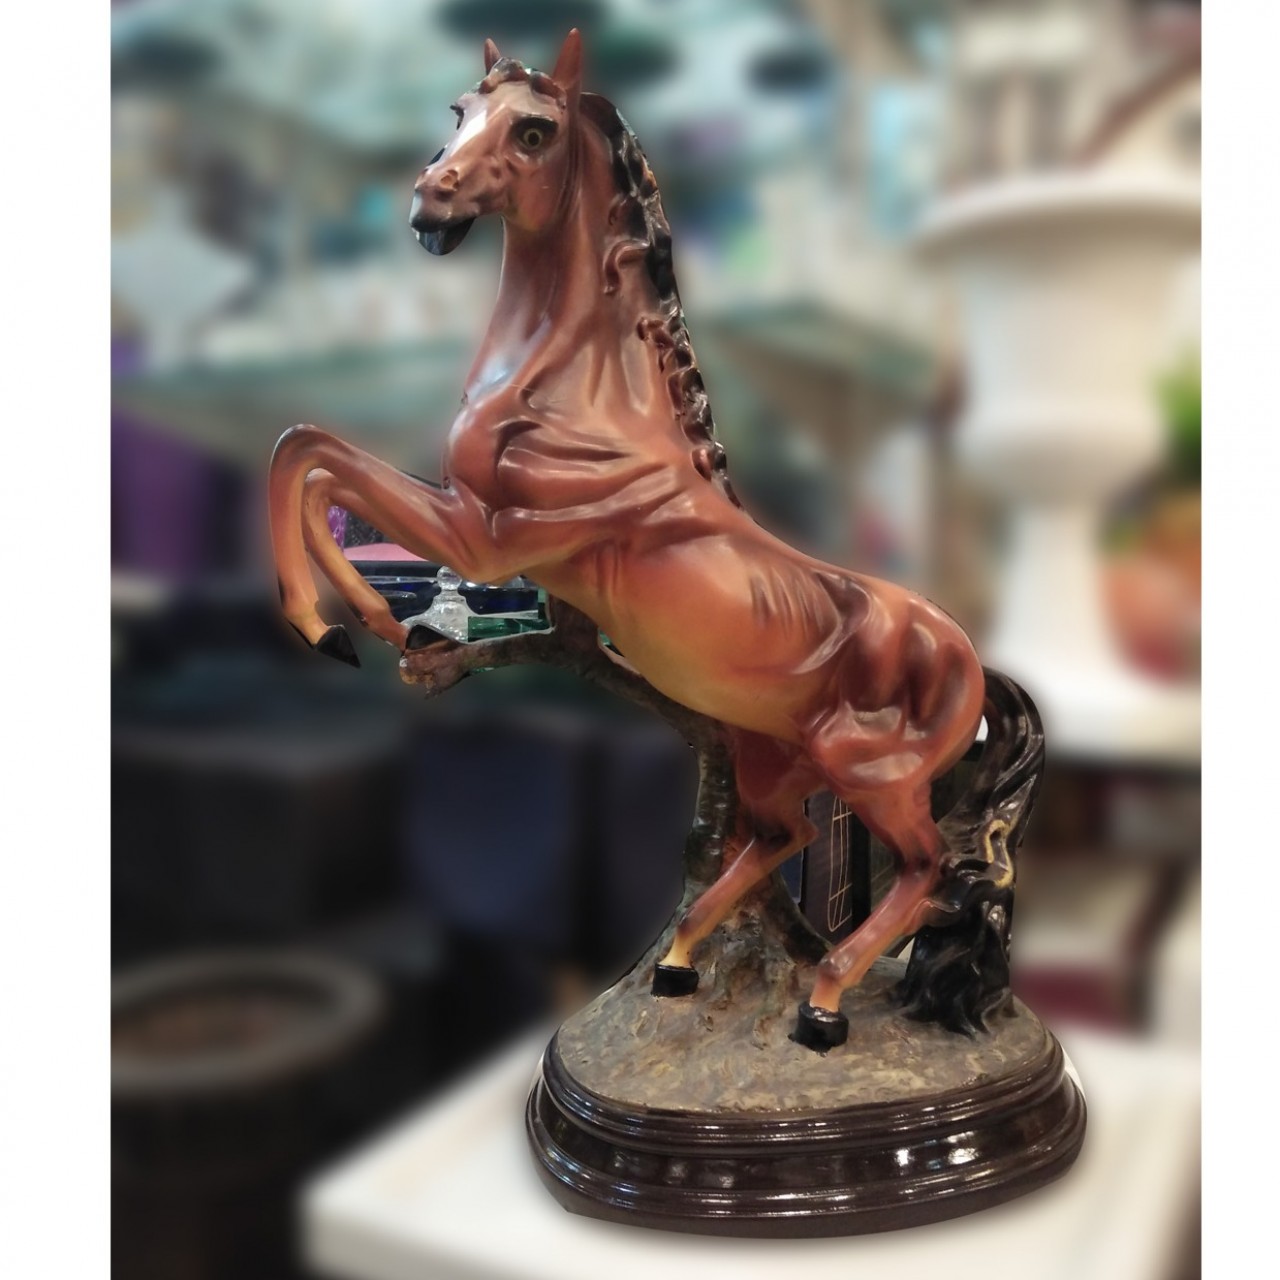 Porcelain Decorative Horse For Home & Office Decoration